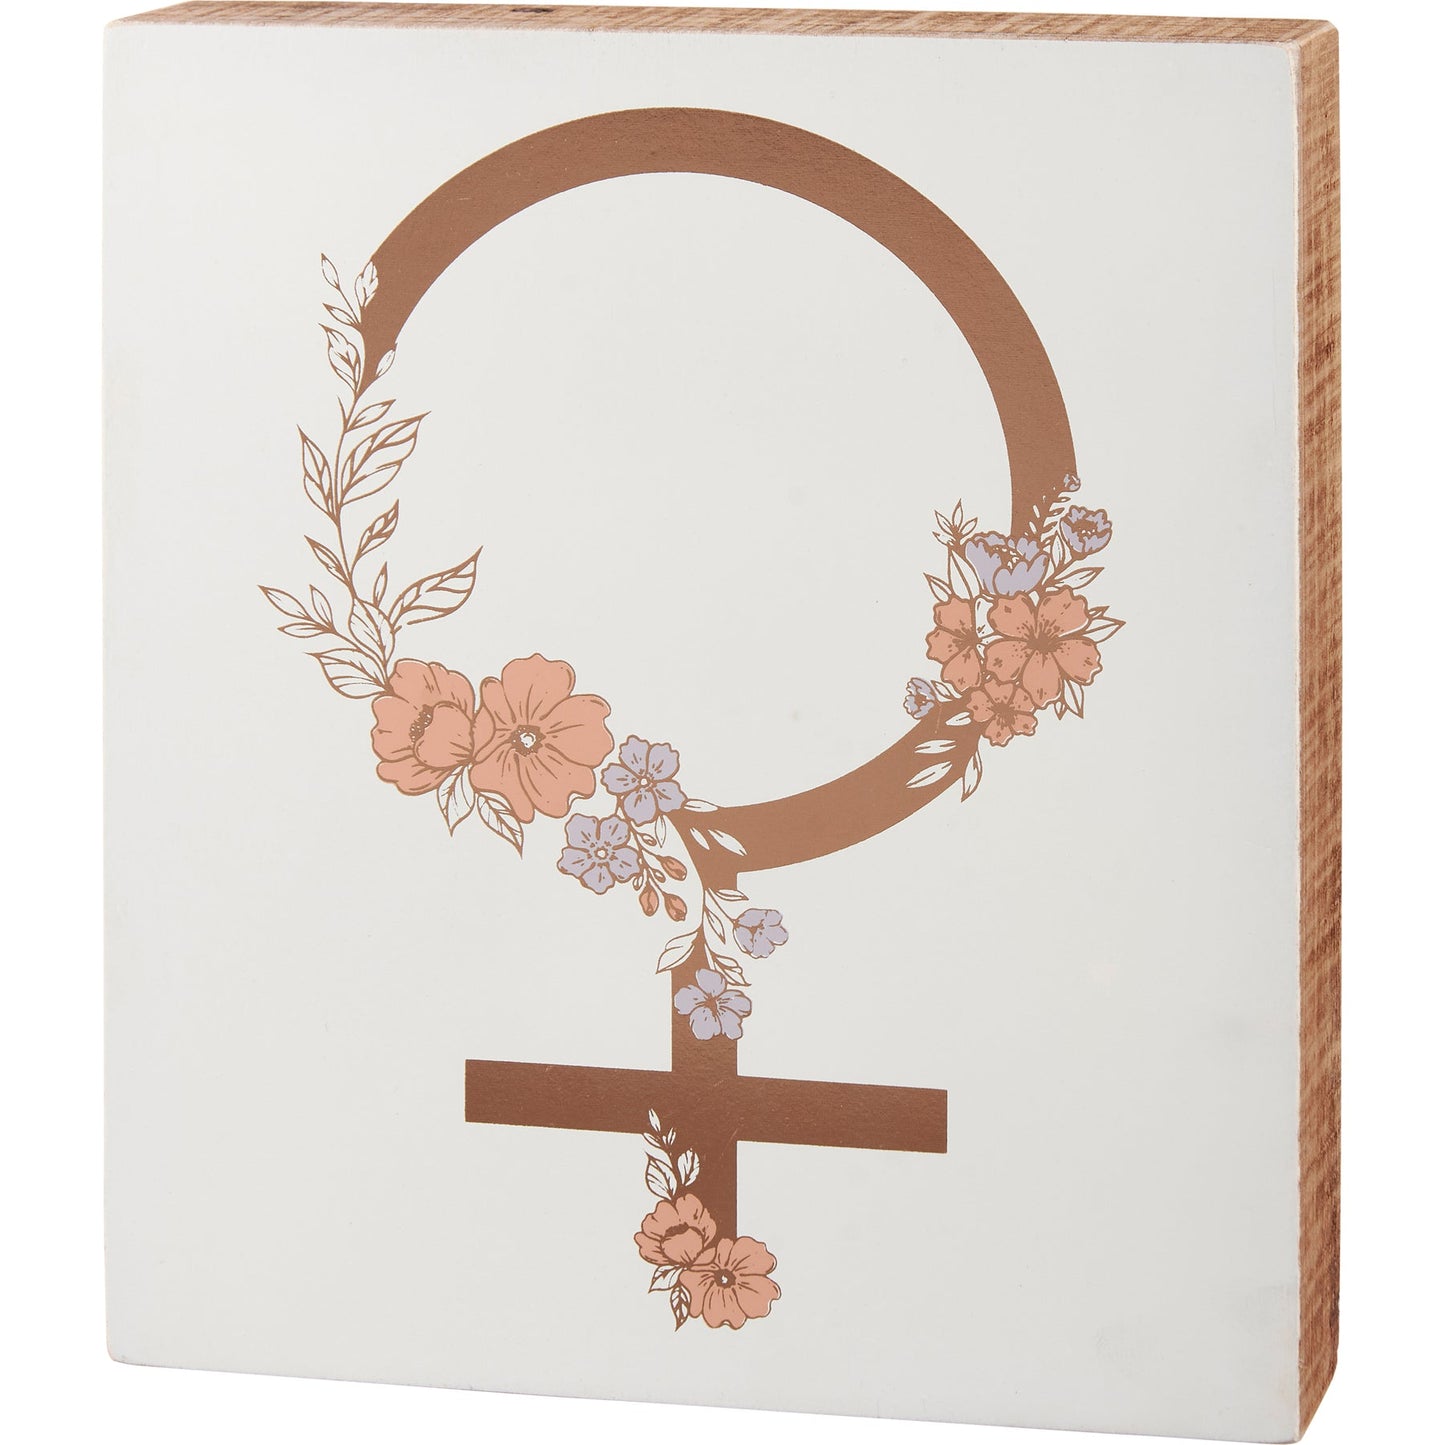 Female Box Sign | Female Gender Symbol Wooden Sign Decor | 7.75" x 9"